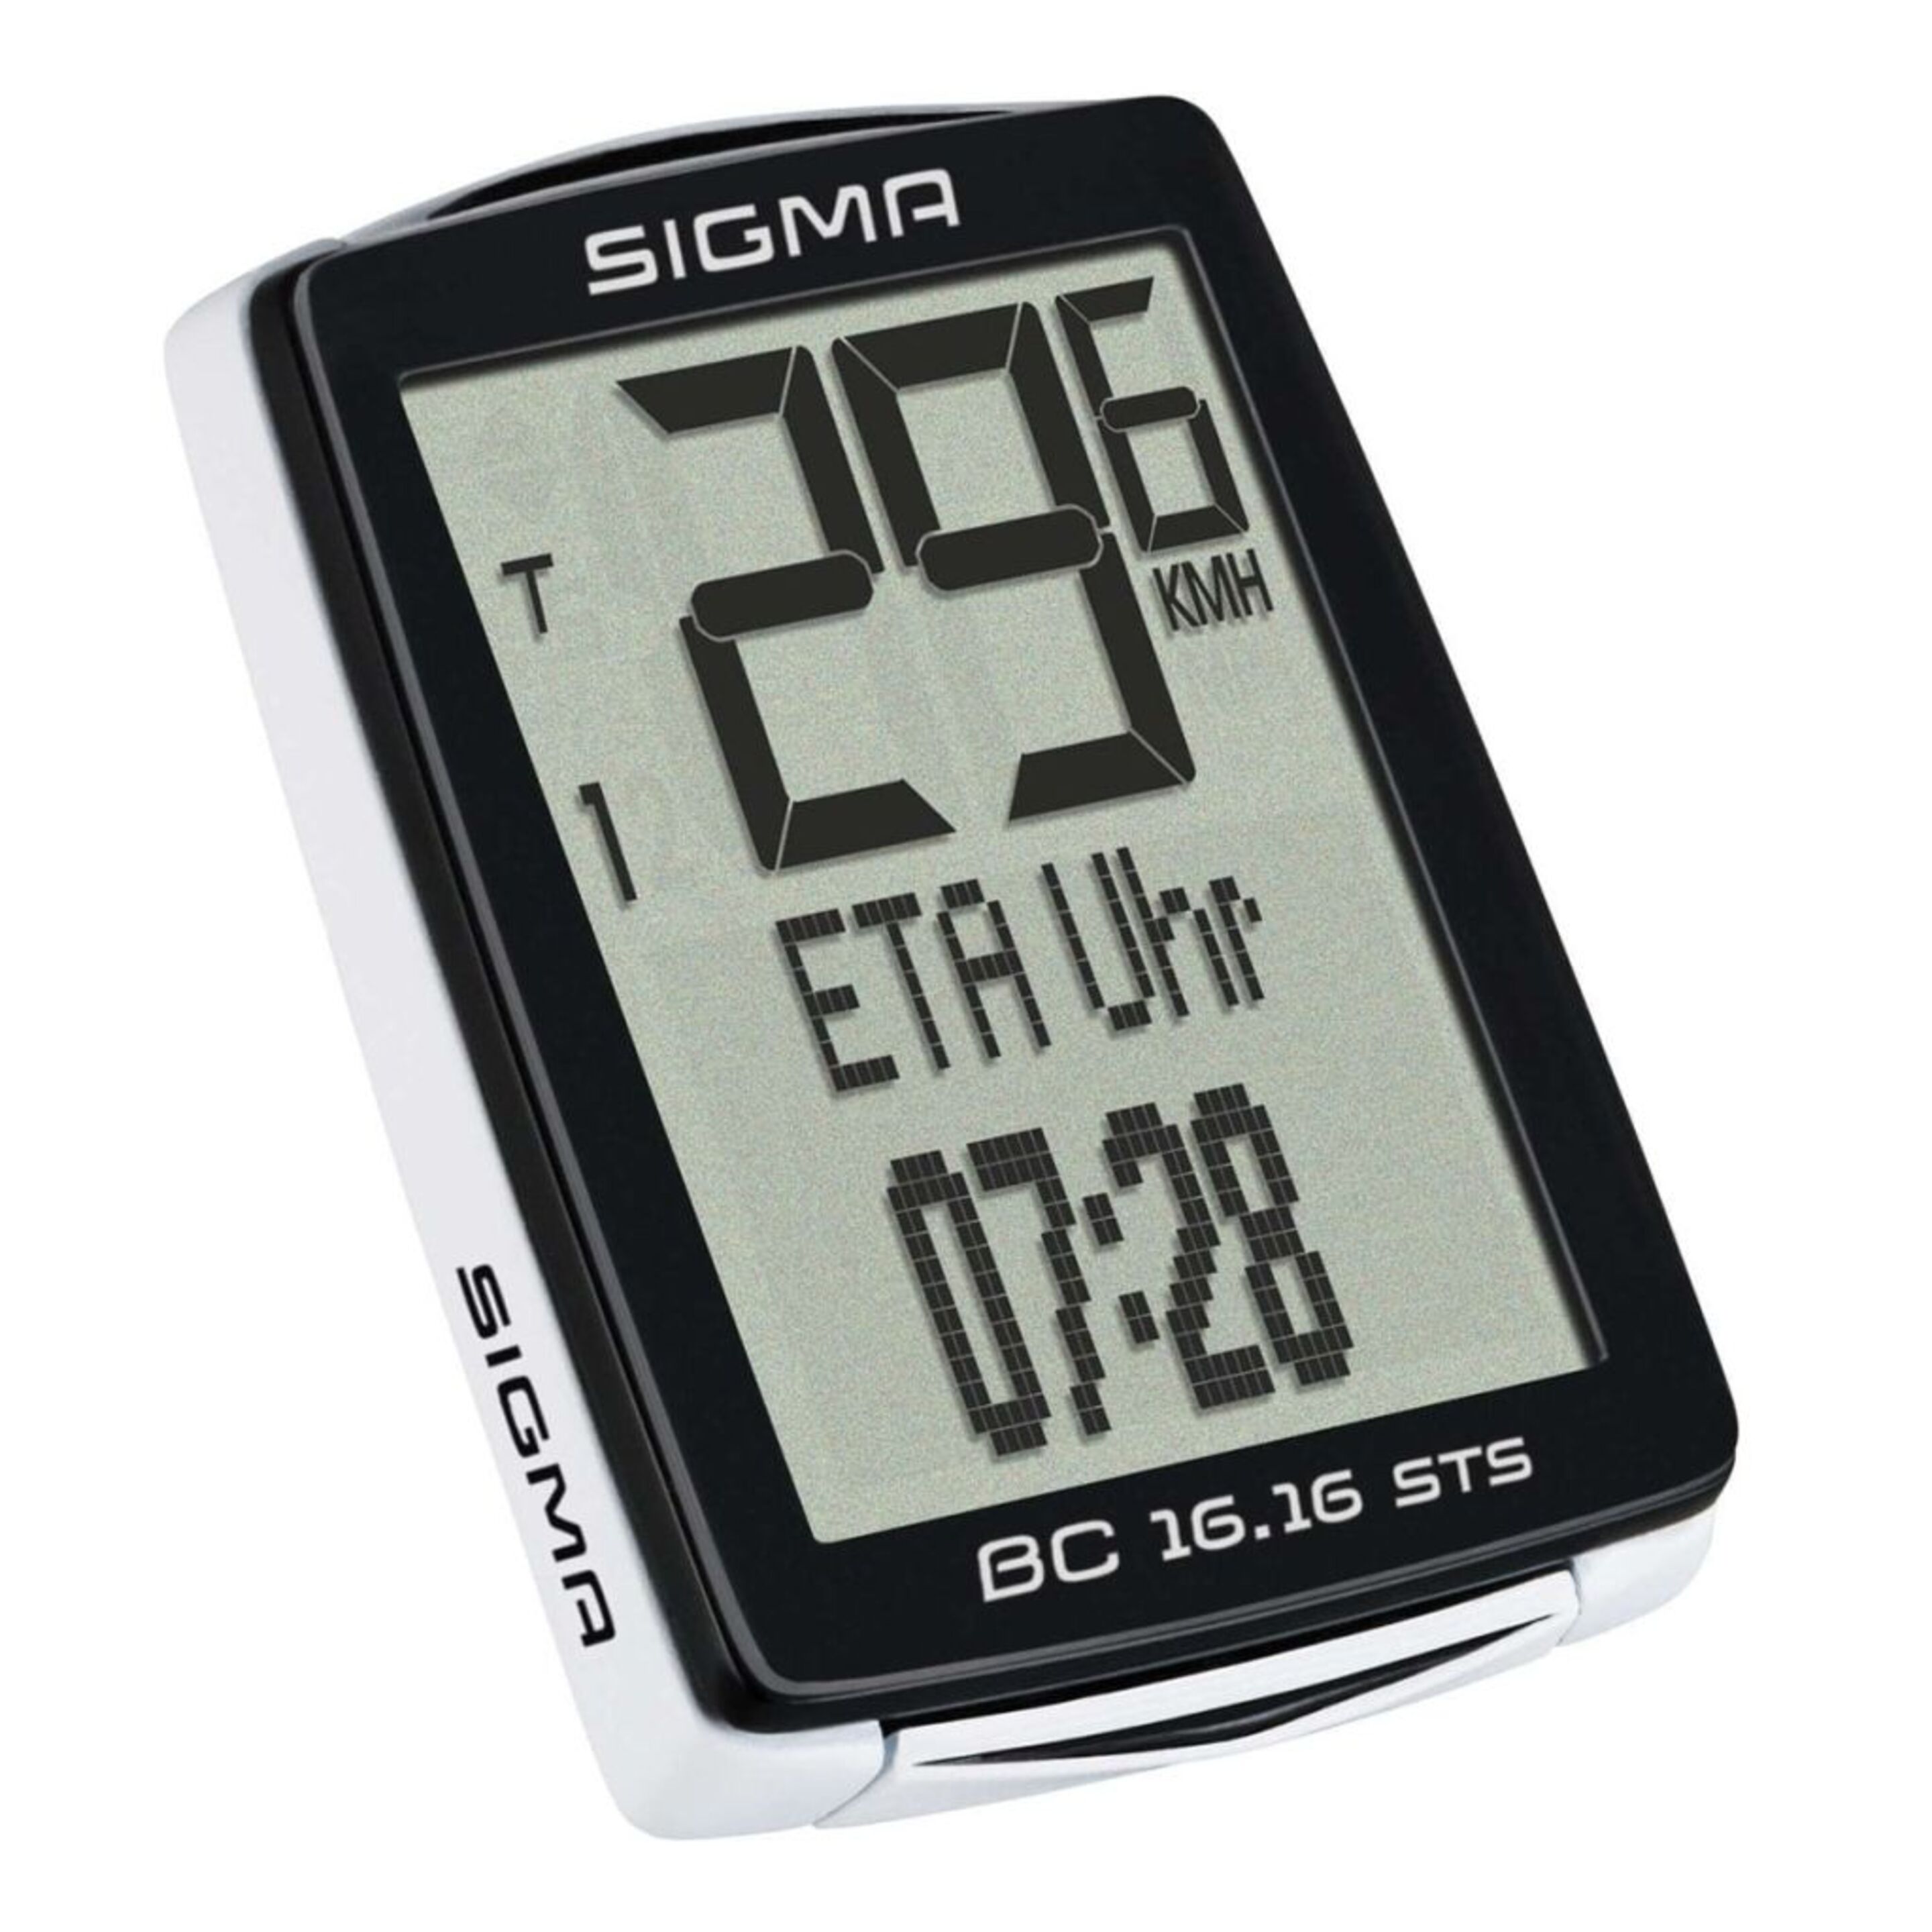 Cuentakilómetros Sigma Bc 16.16 Sts